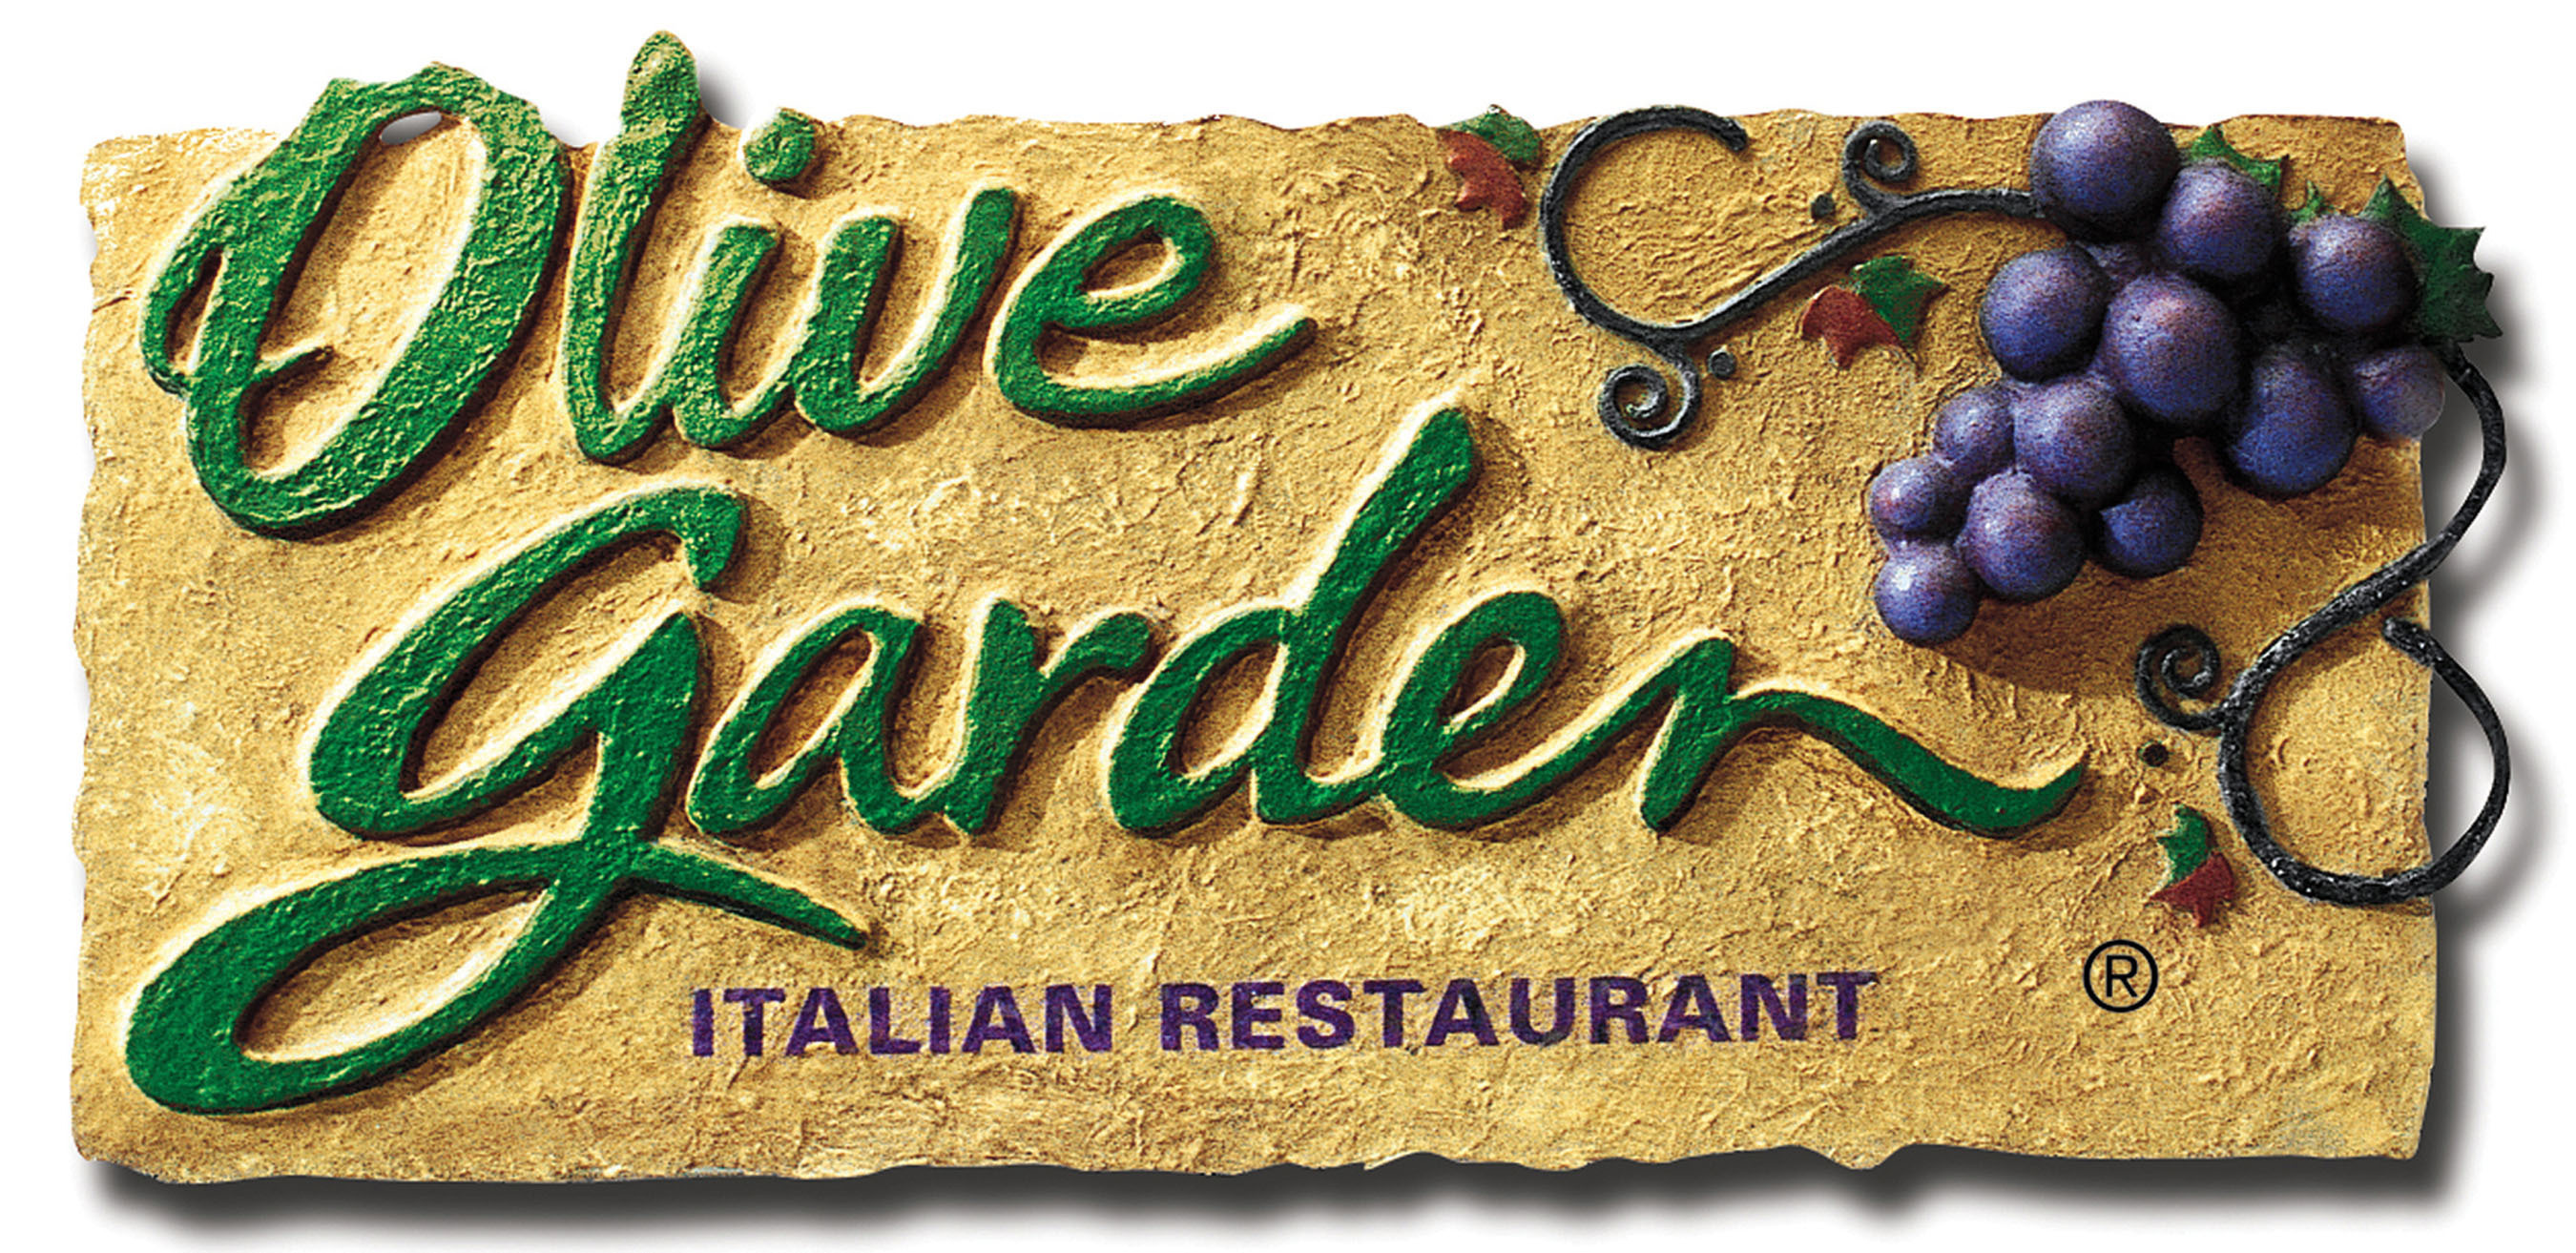 Visit www.olivegarden.com or www.facebook.com/olivegarden.com to learn more! (PRNewsFoto/Darden Restaurants, Inc.: General) (PRNewsFoto/DARDEN RESTAURANTS, INC.)